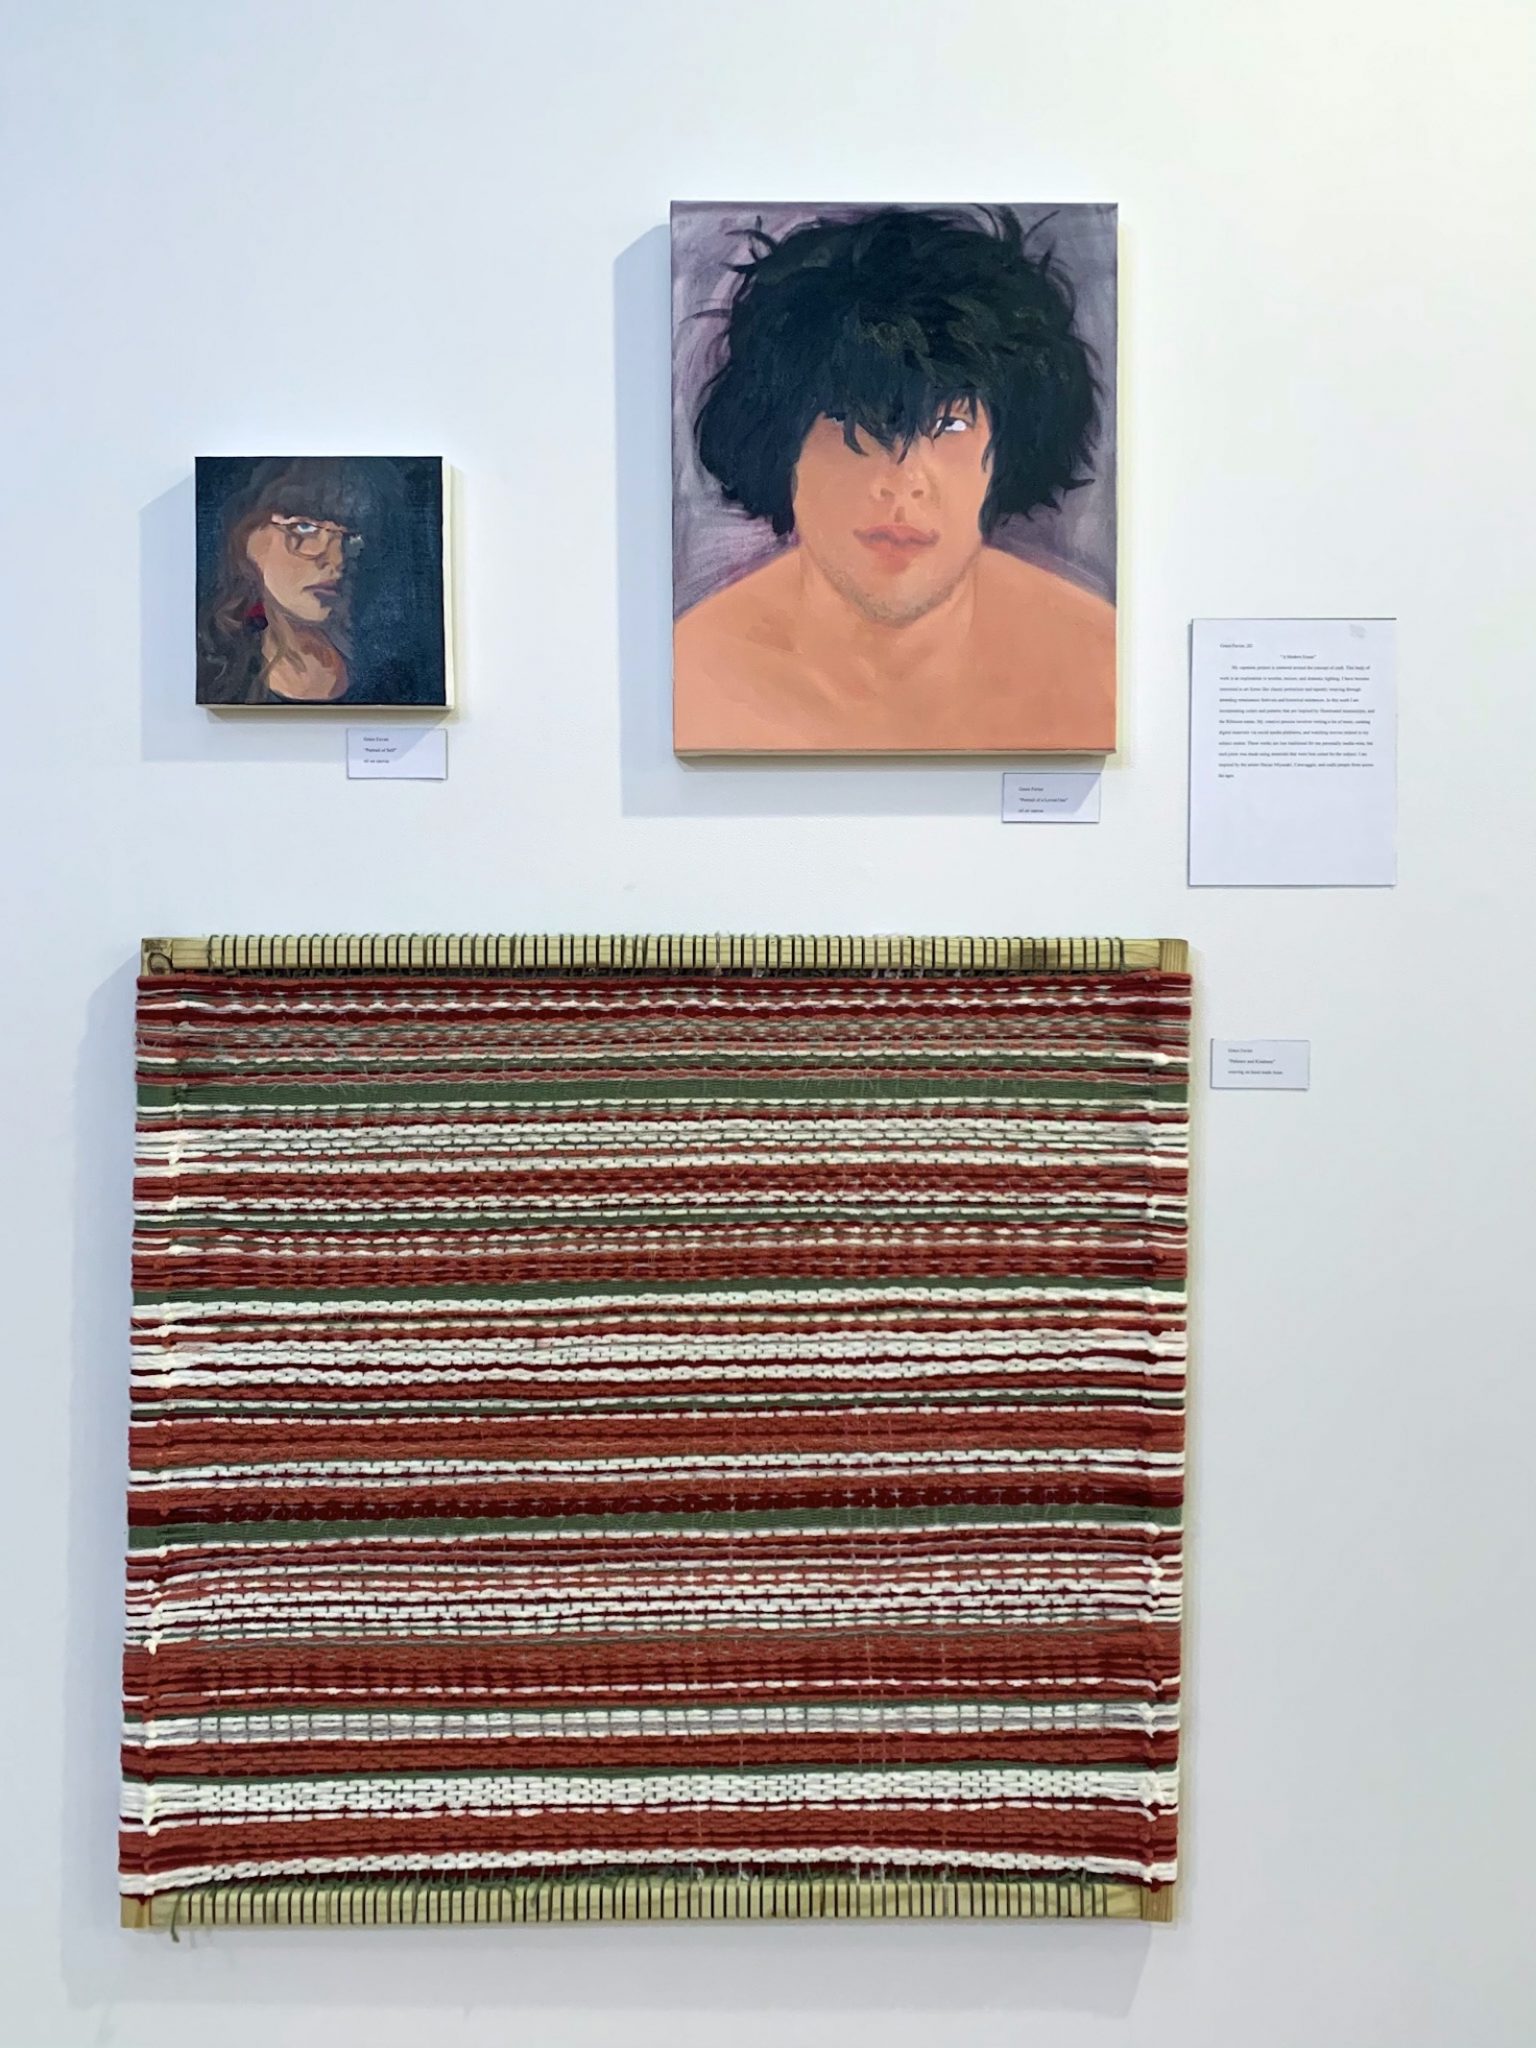 A tapestry blanket below two portrait paintings